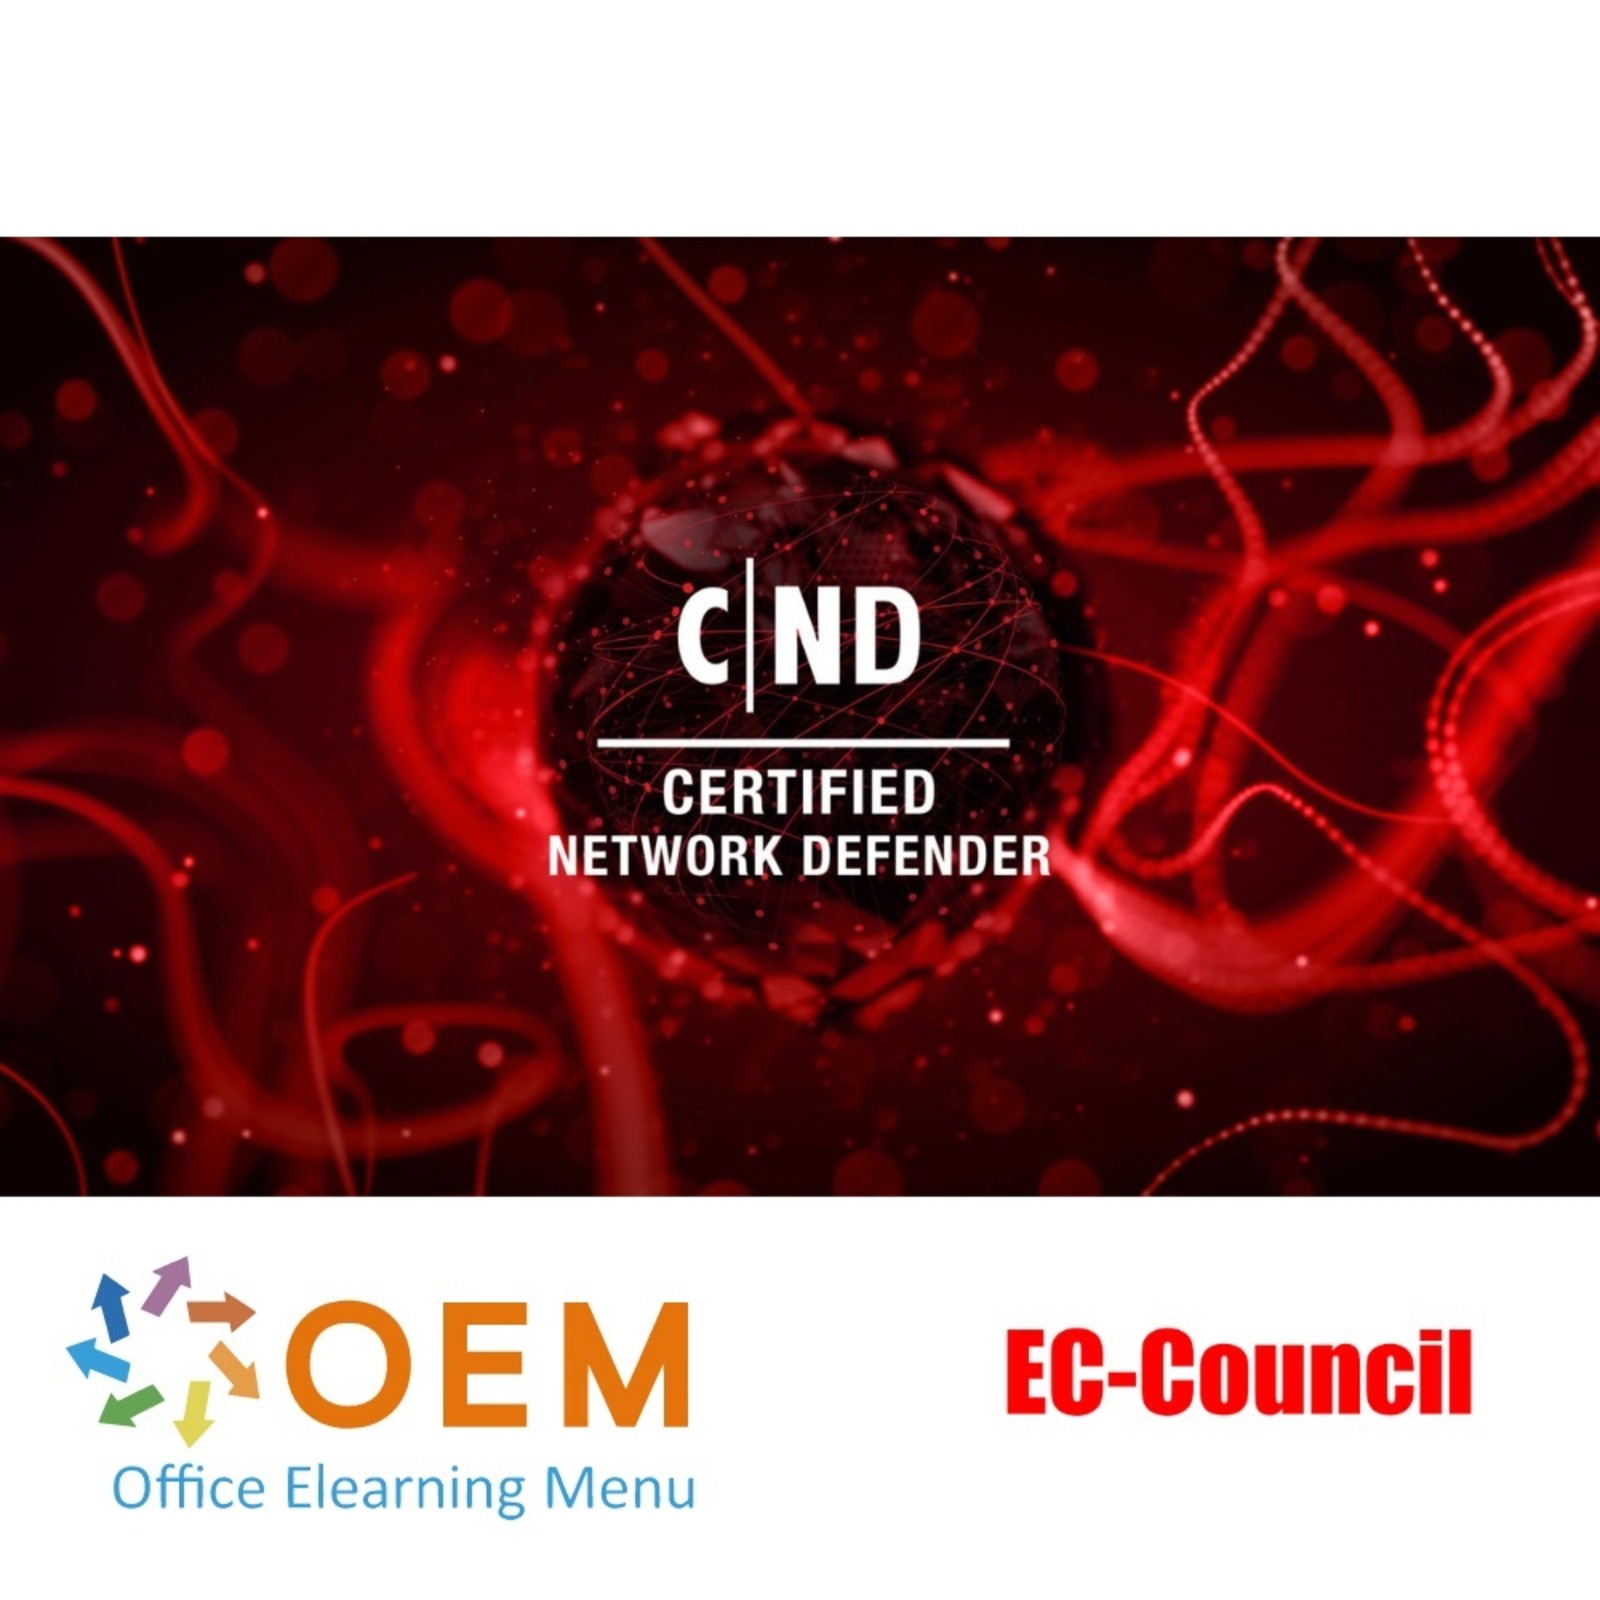 EC-Council Certified Network Defender (CND) Training